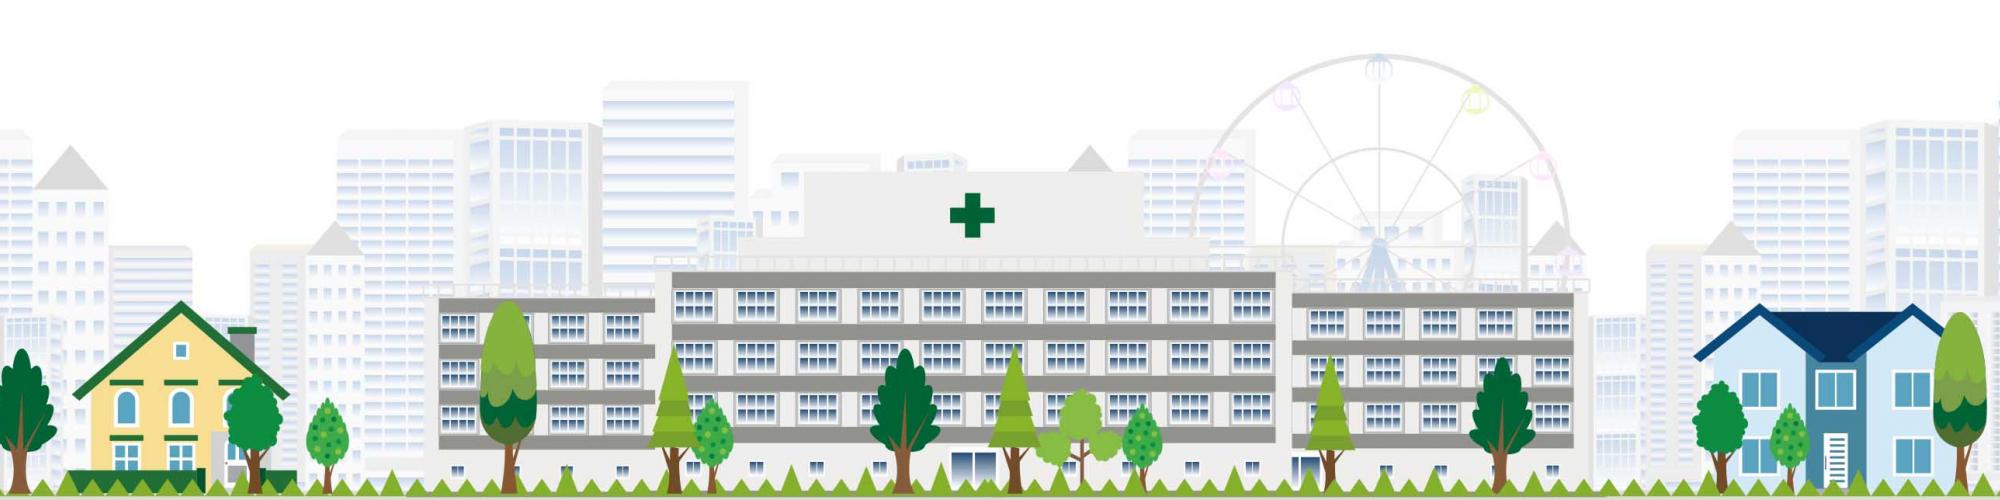 DRK-Krankenhaus  Mecklenburg-Strelitz gGmbH